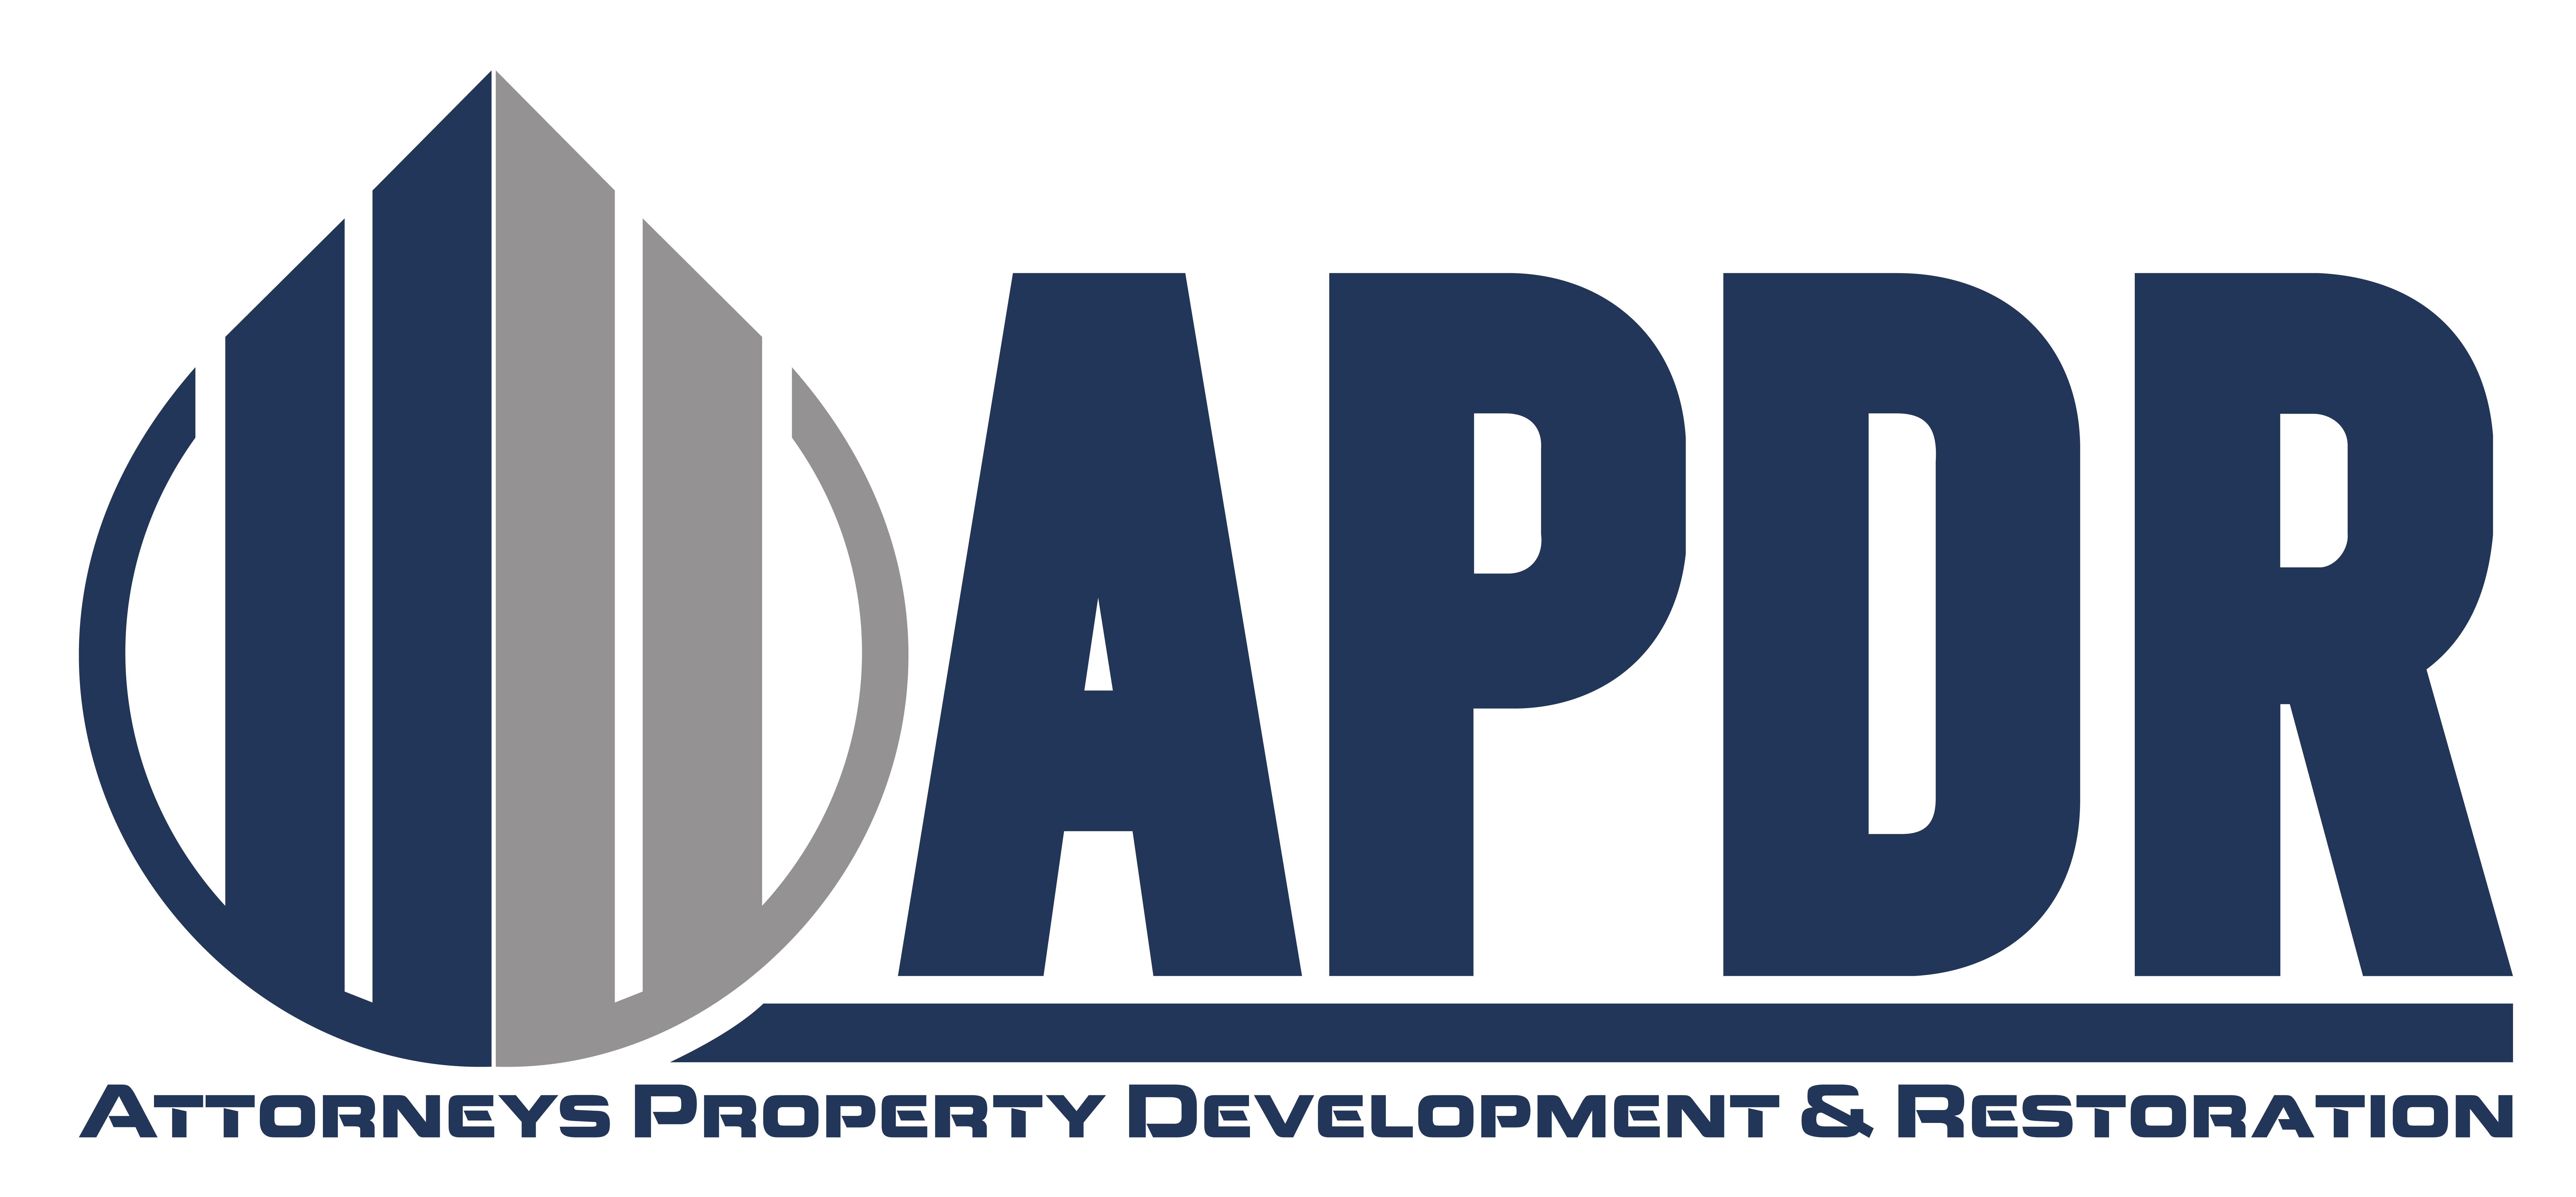 Attorneys Property Development and Restoration Logo